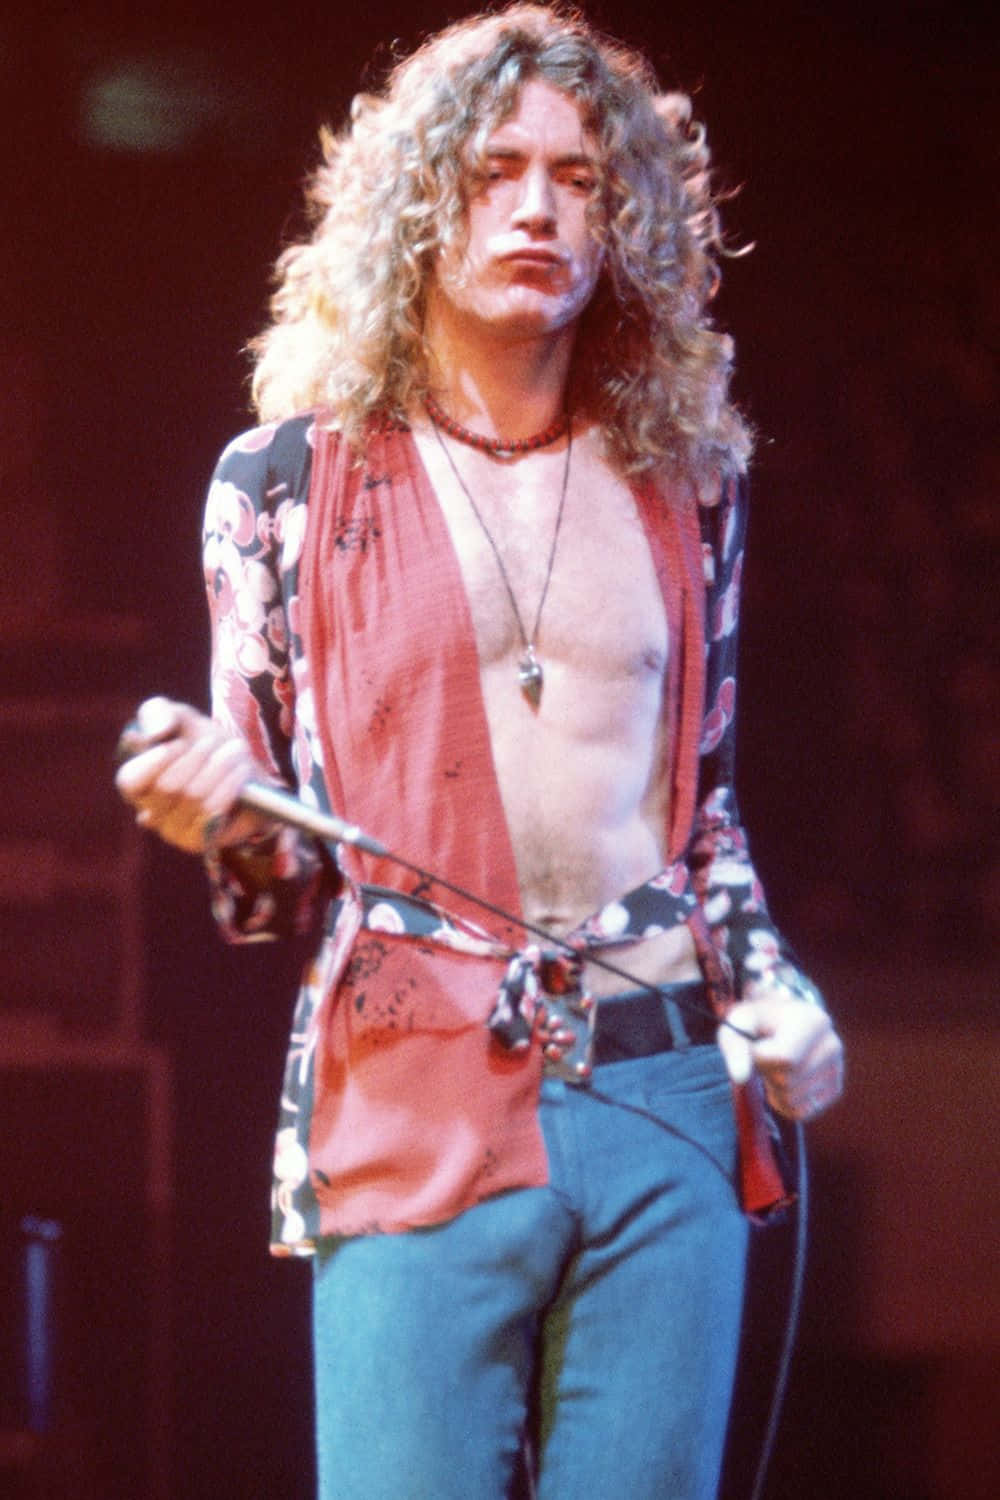 Download Legendary Musician Robert Plant | Wallpapers.com